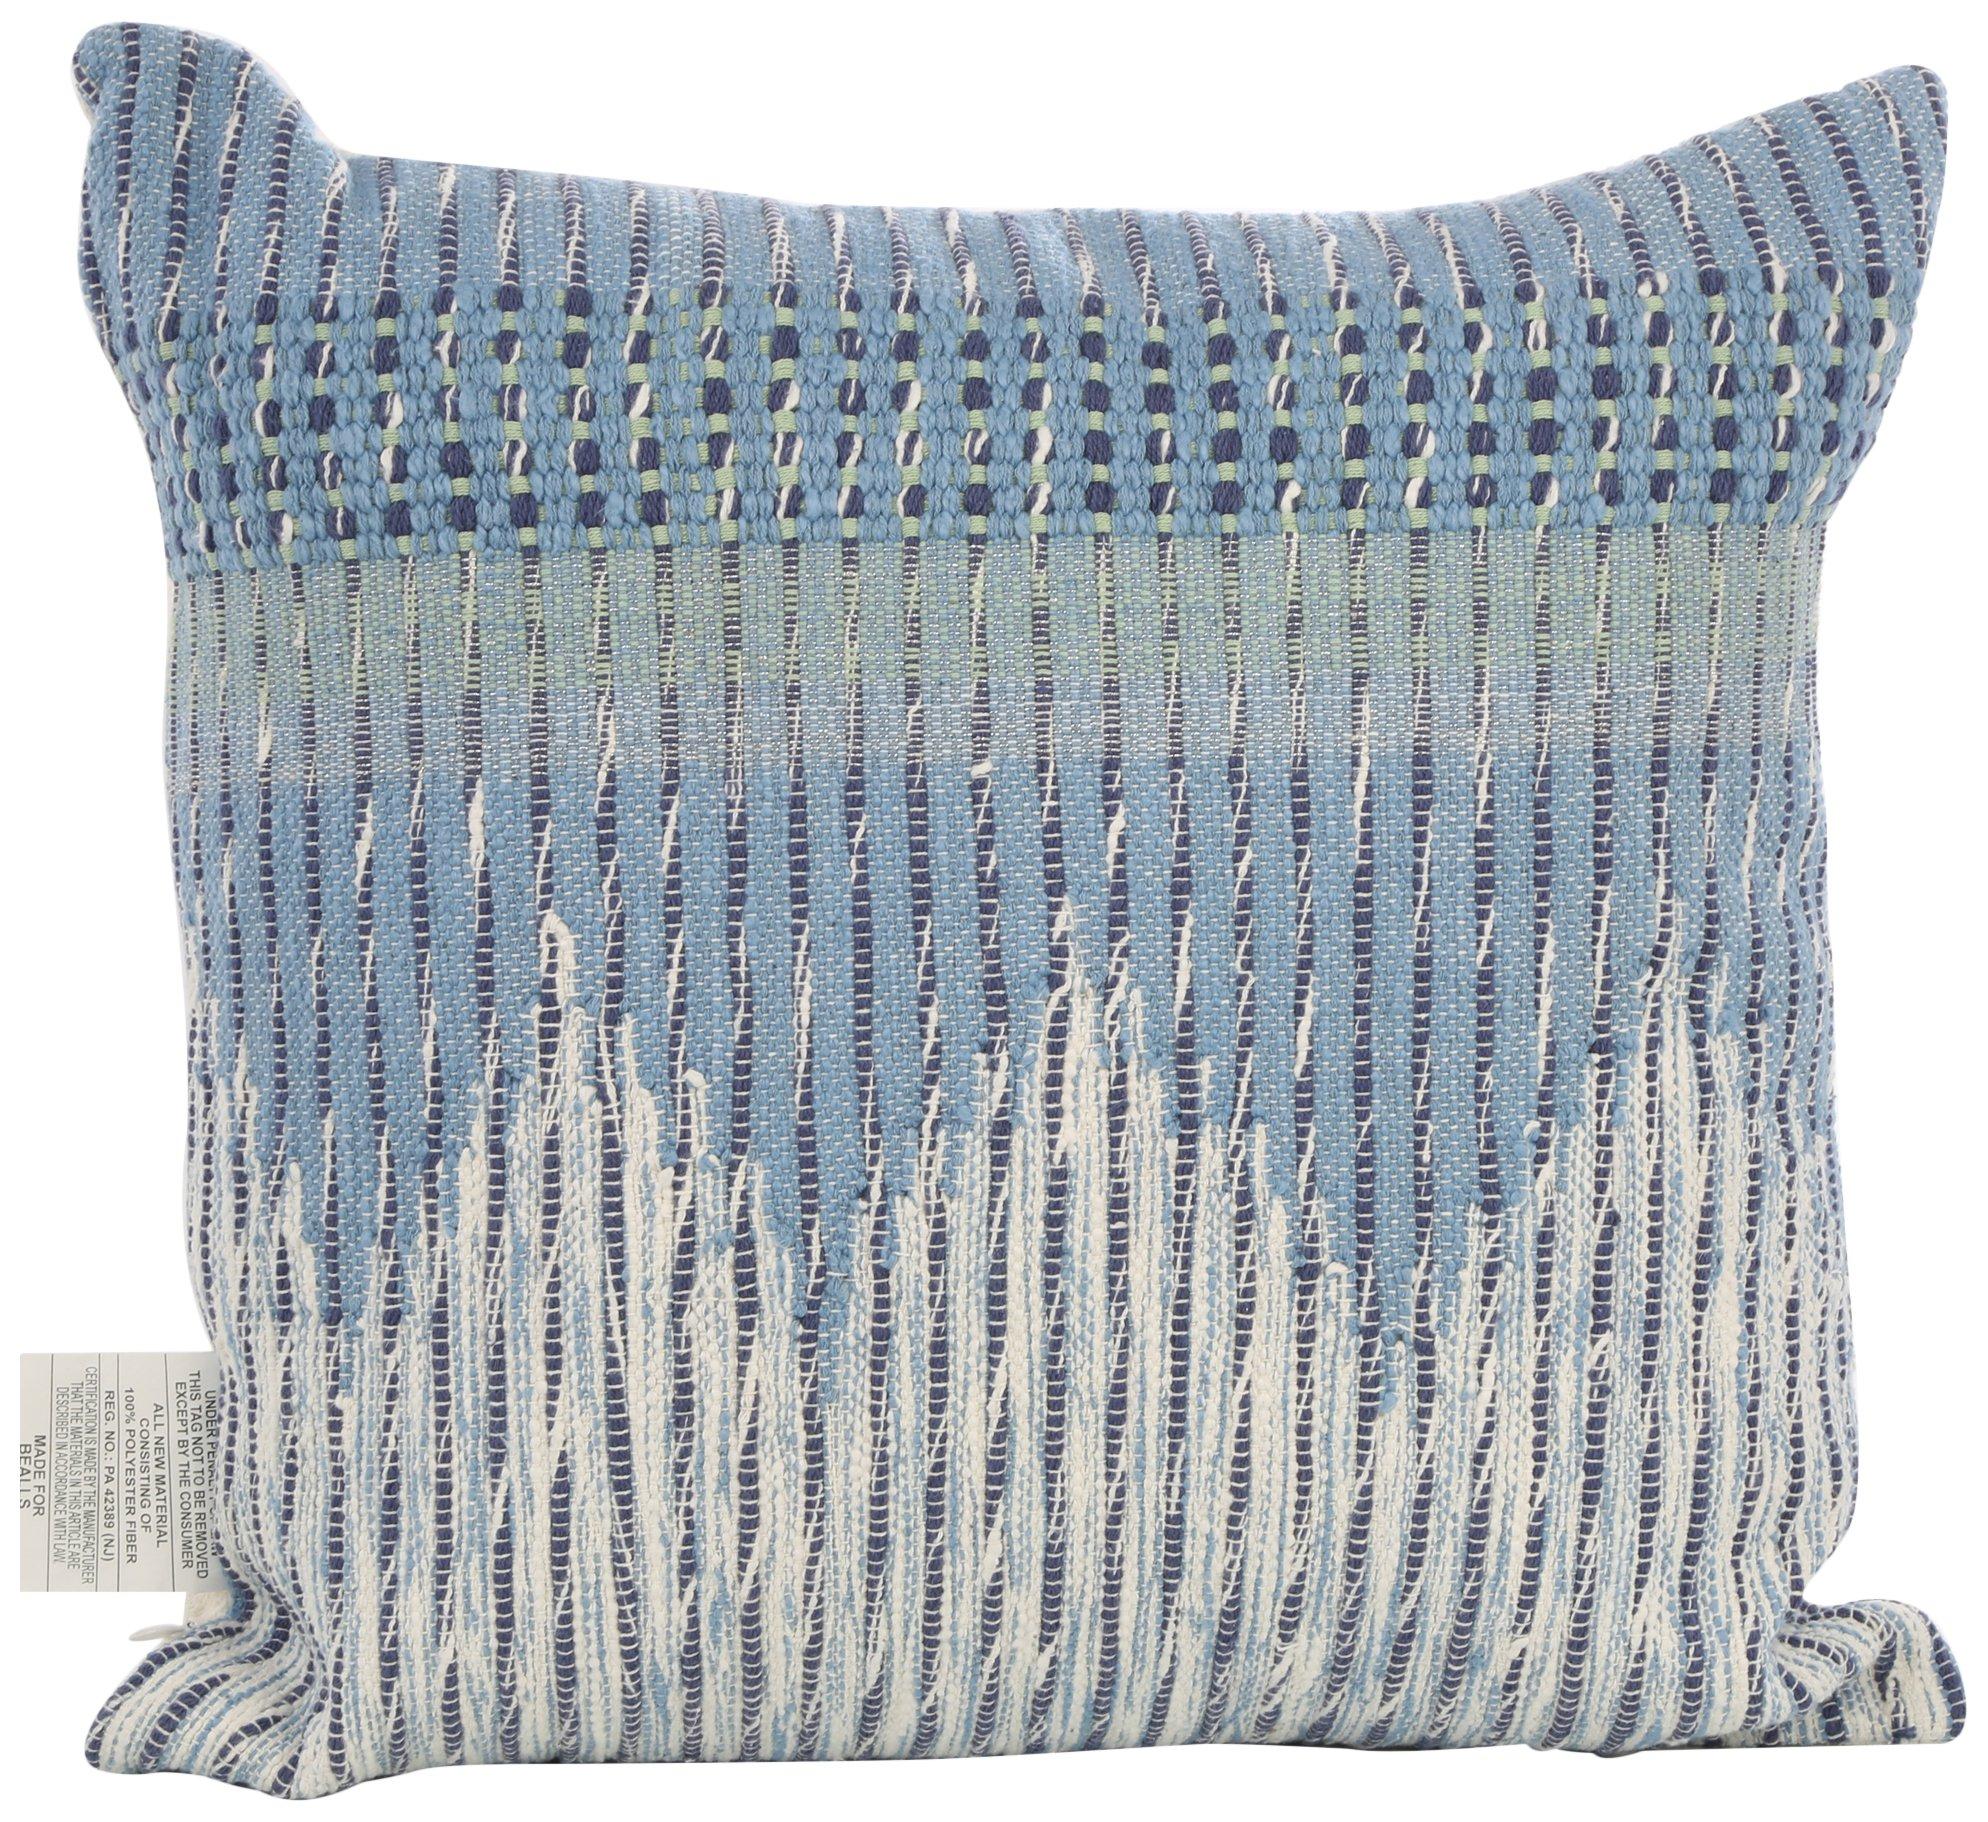 20x20 Stacia Stripe Decorative Pillow